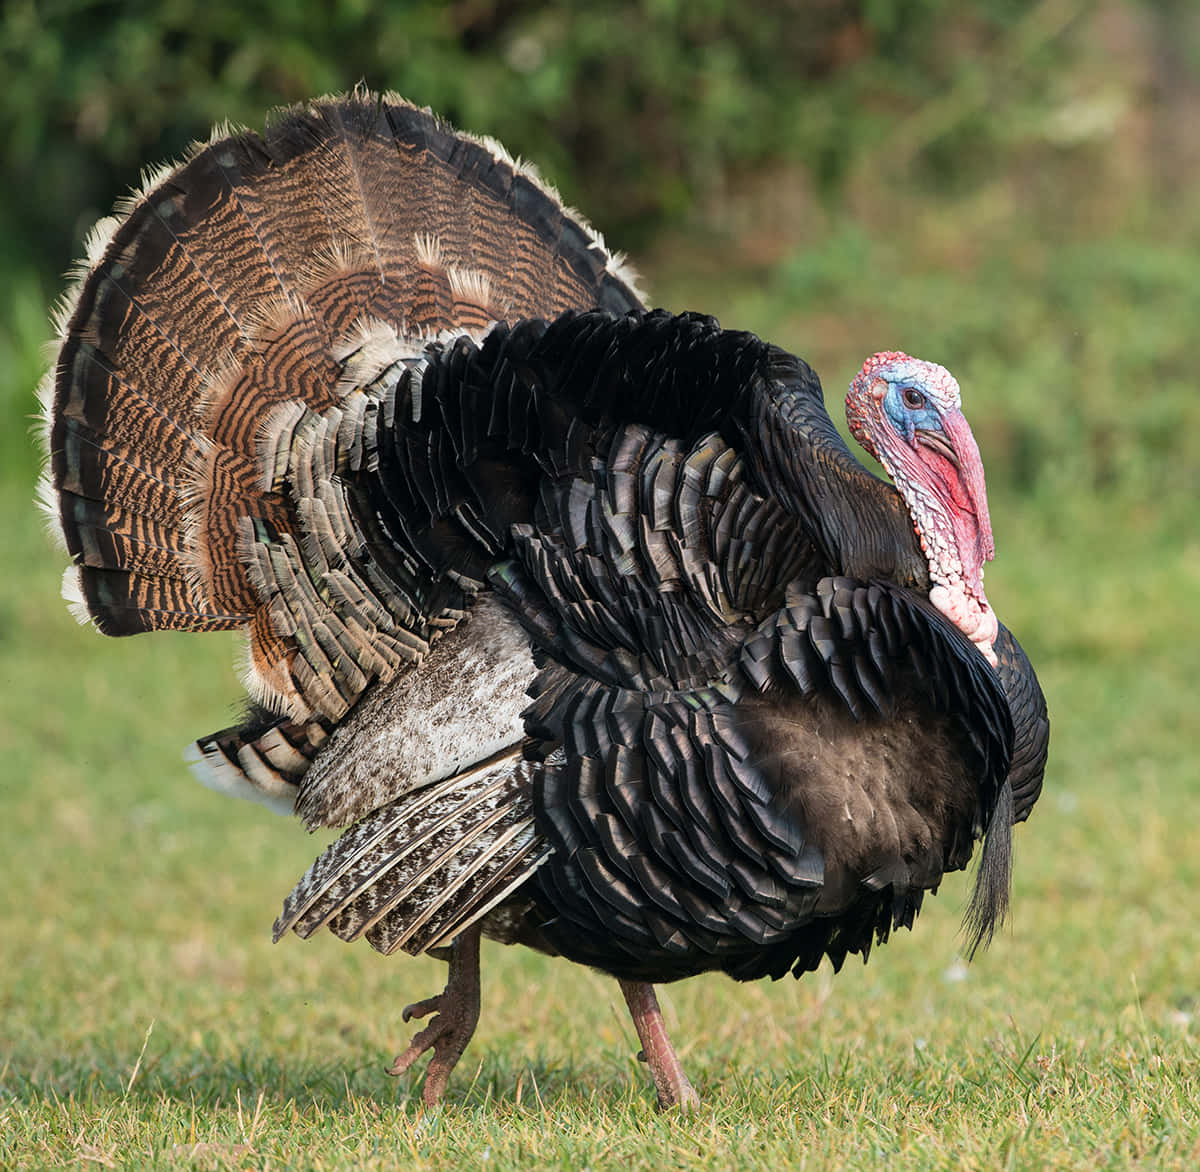 "Wild Turkey - Witness Nature Up Close"